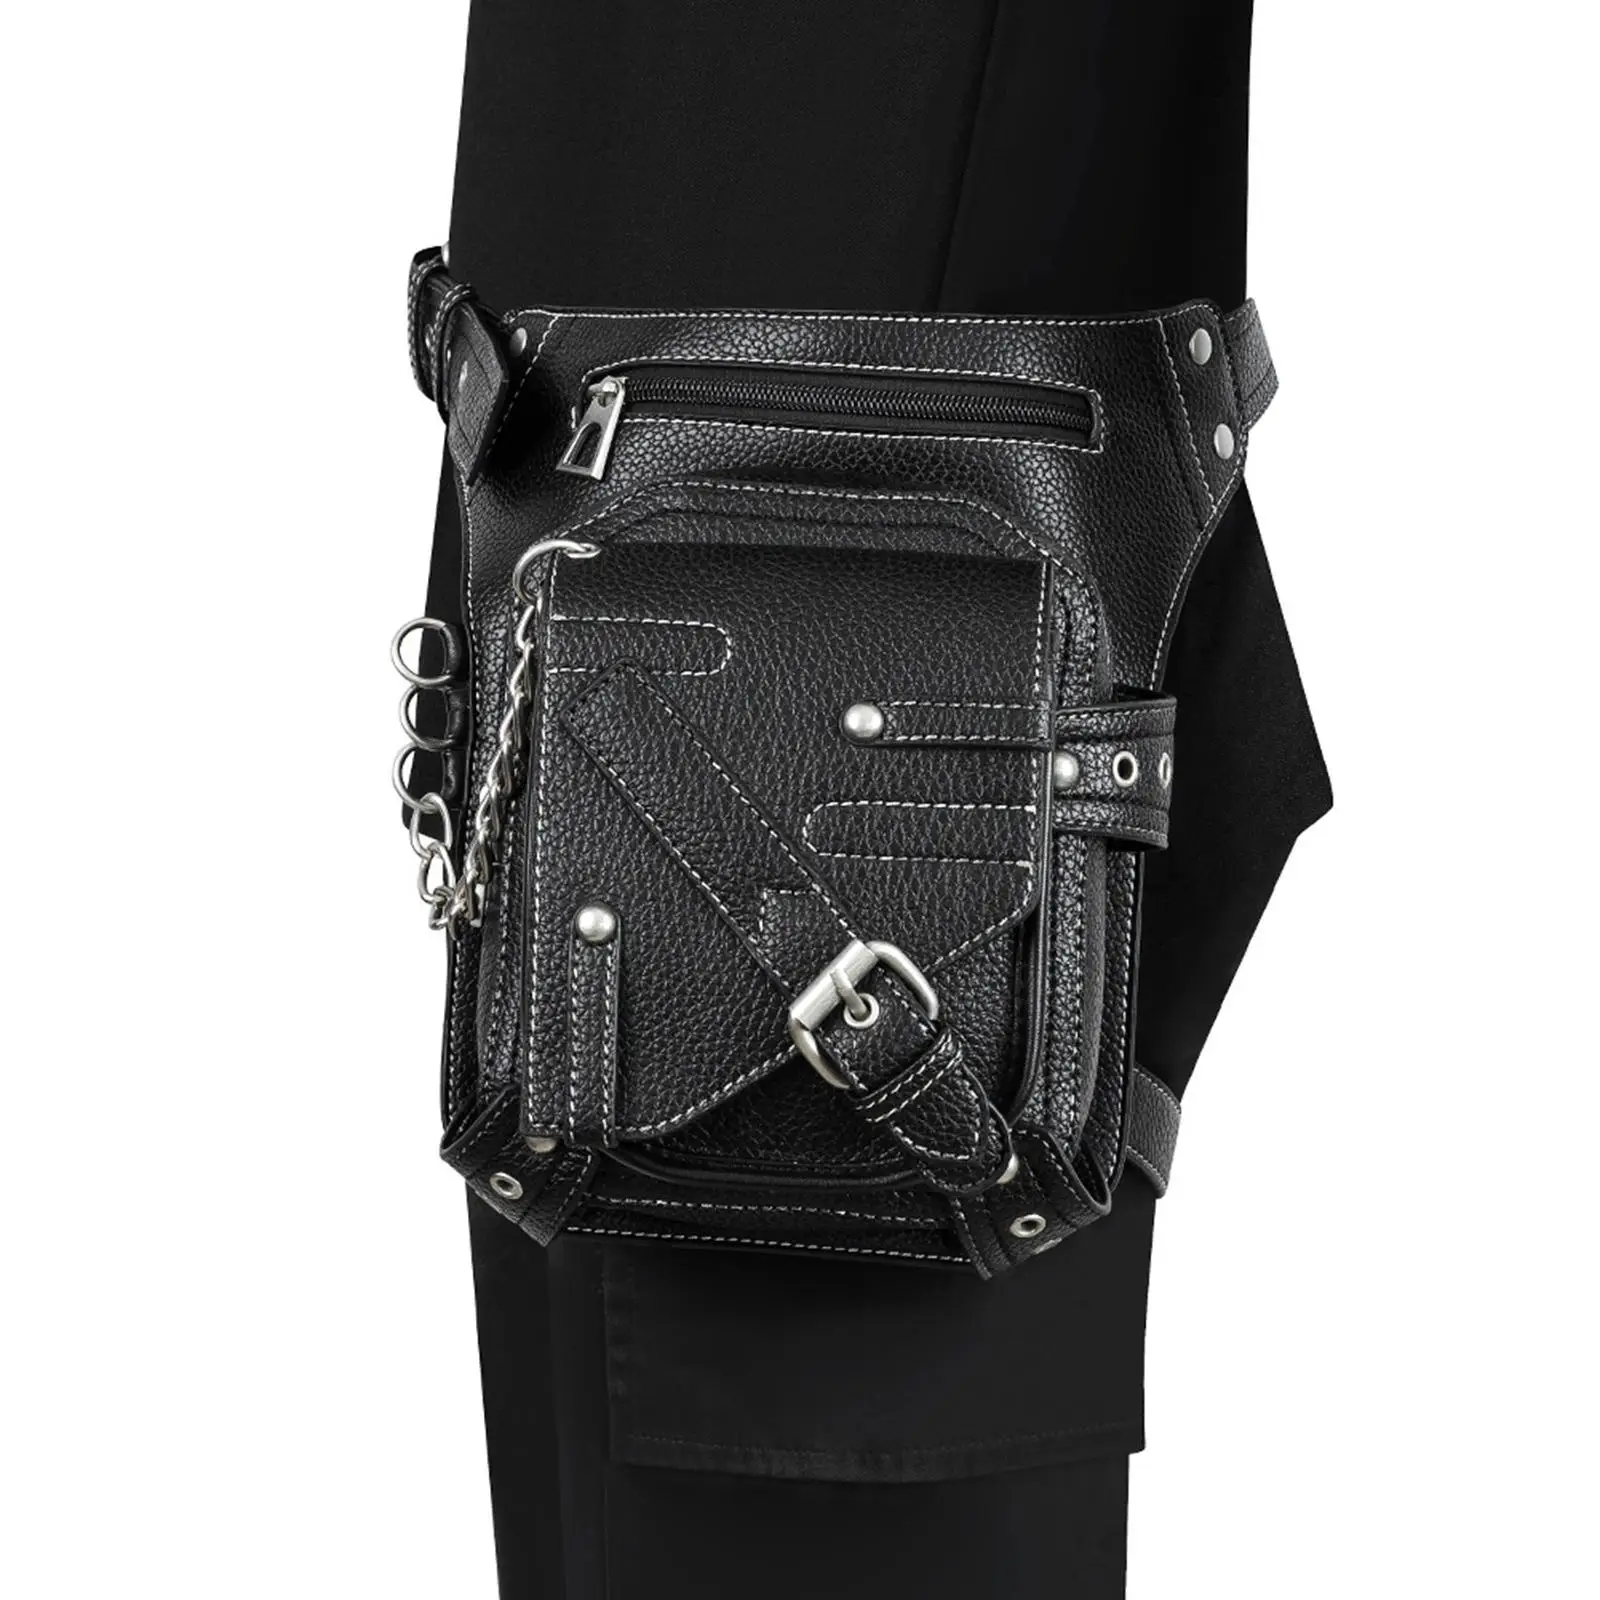 PU Leather Steampunk Waist Bag Fanny Pack Thigh Leg Hip Holster Outdoors Multifunctional Casual Climbing Shoulder Messenger Bags